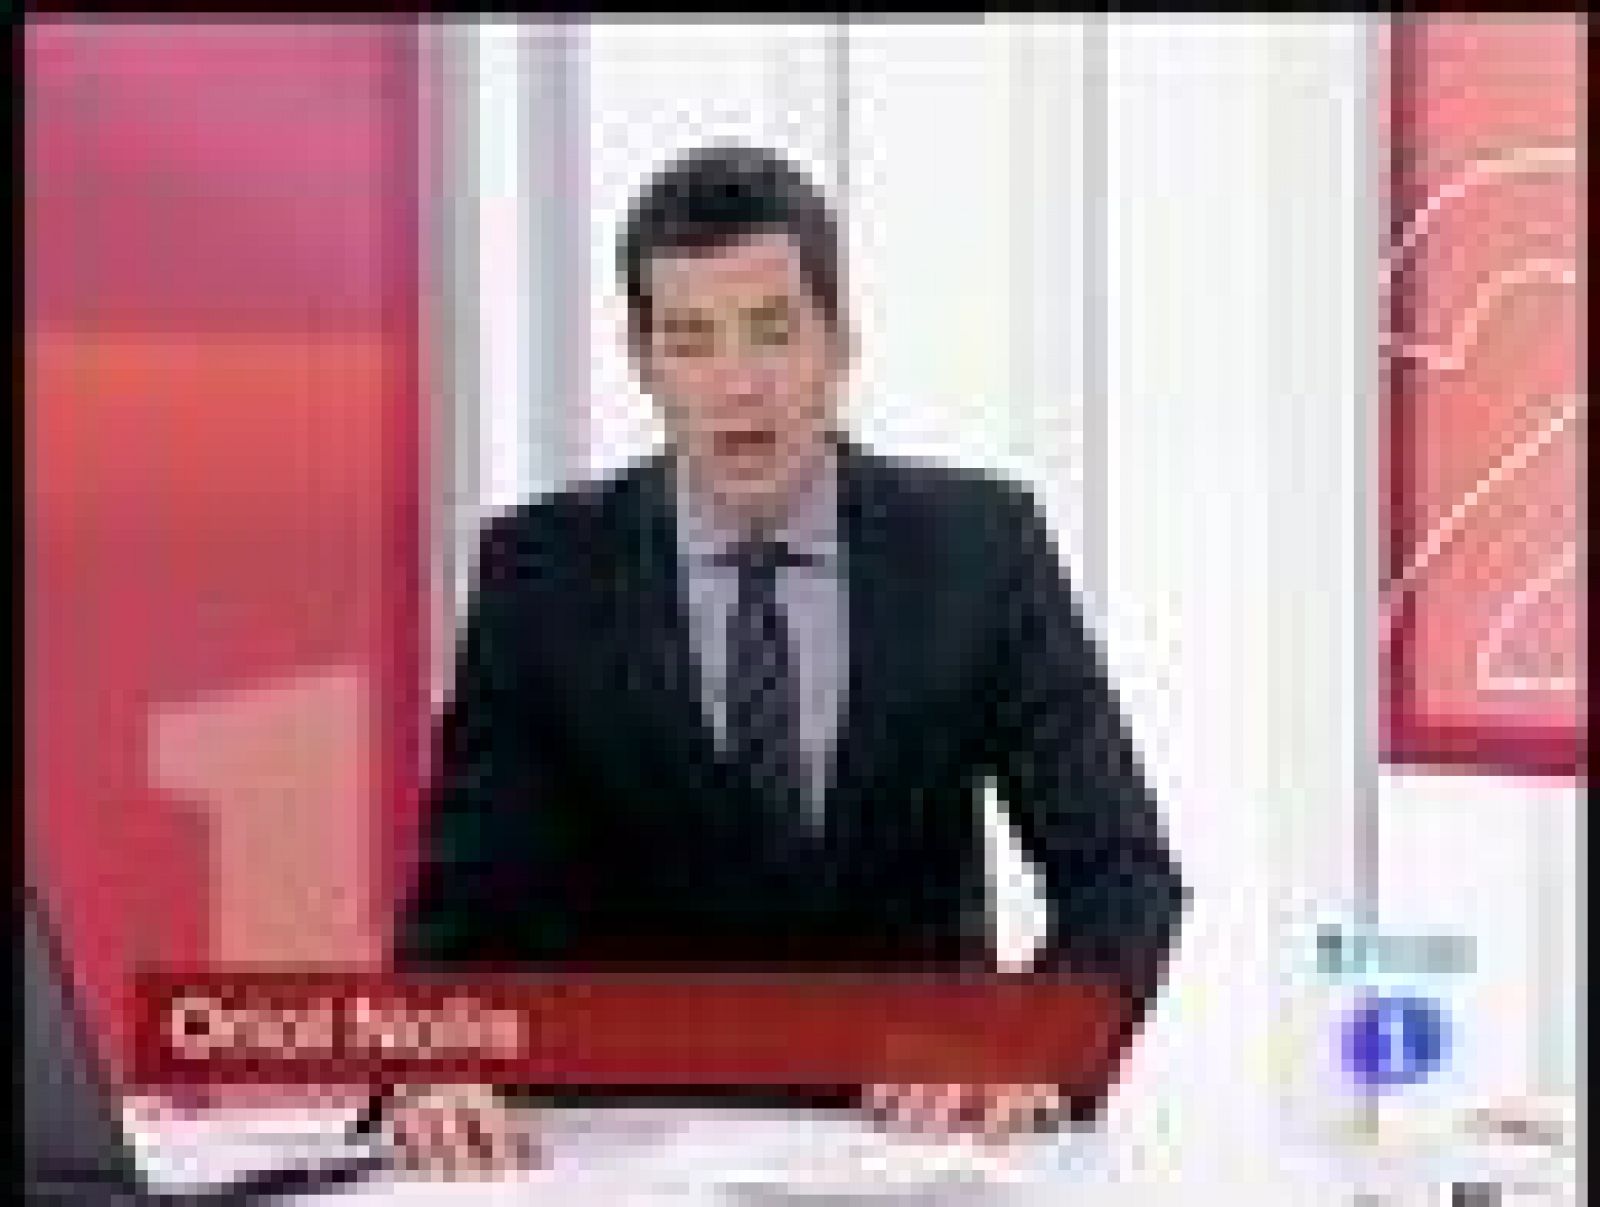 Telediario 1: Telediario Matinal en 4' - 08/01/11 | RTVE Play